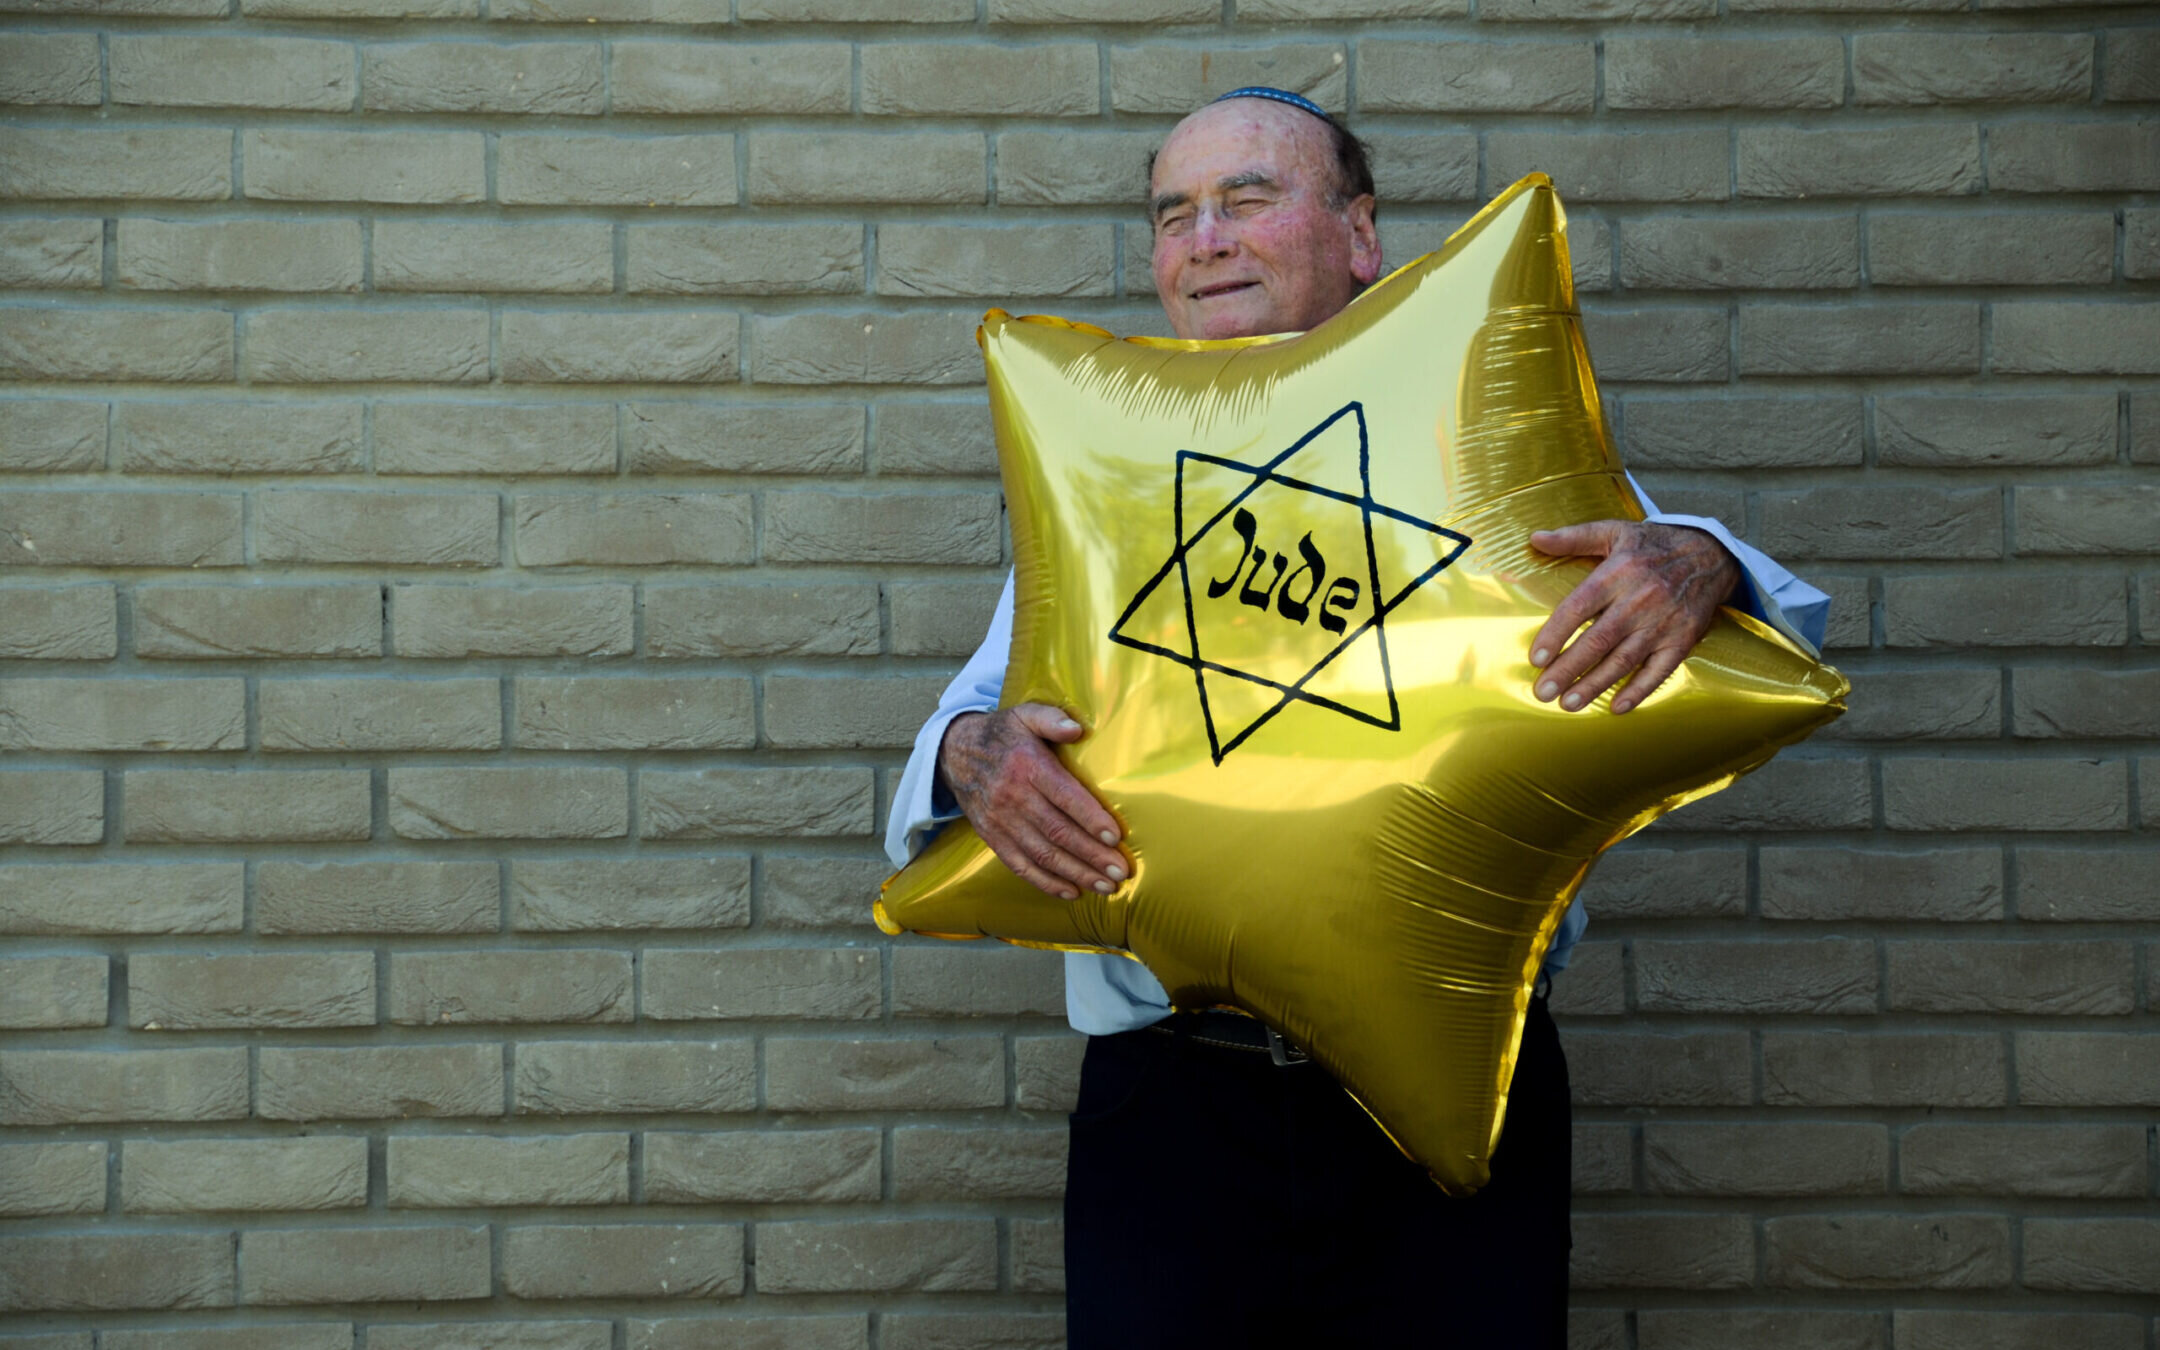 Dugo Leitner, a survivor of Auschwitz-Birkenau, holds a balloon shaped like the Jewish star that the Nazis forced Jews to wear. (Erez Kaganovitz)